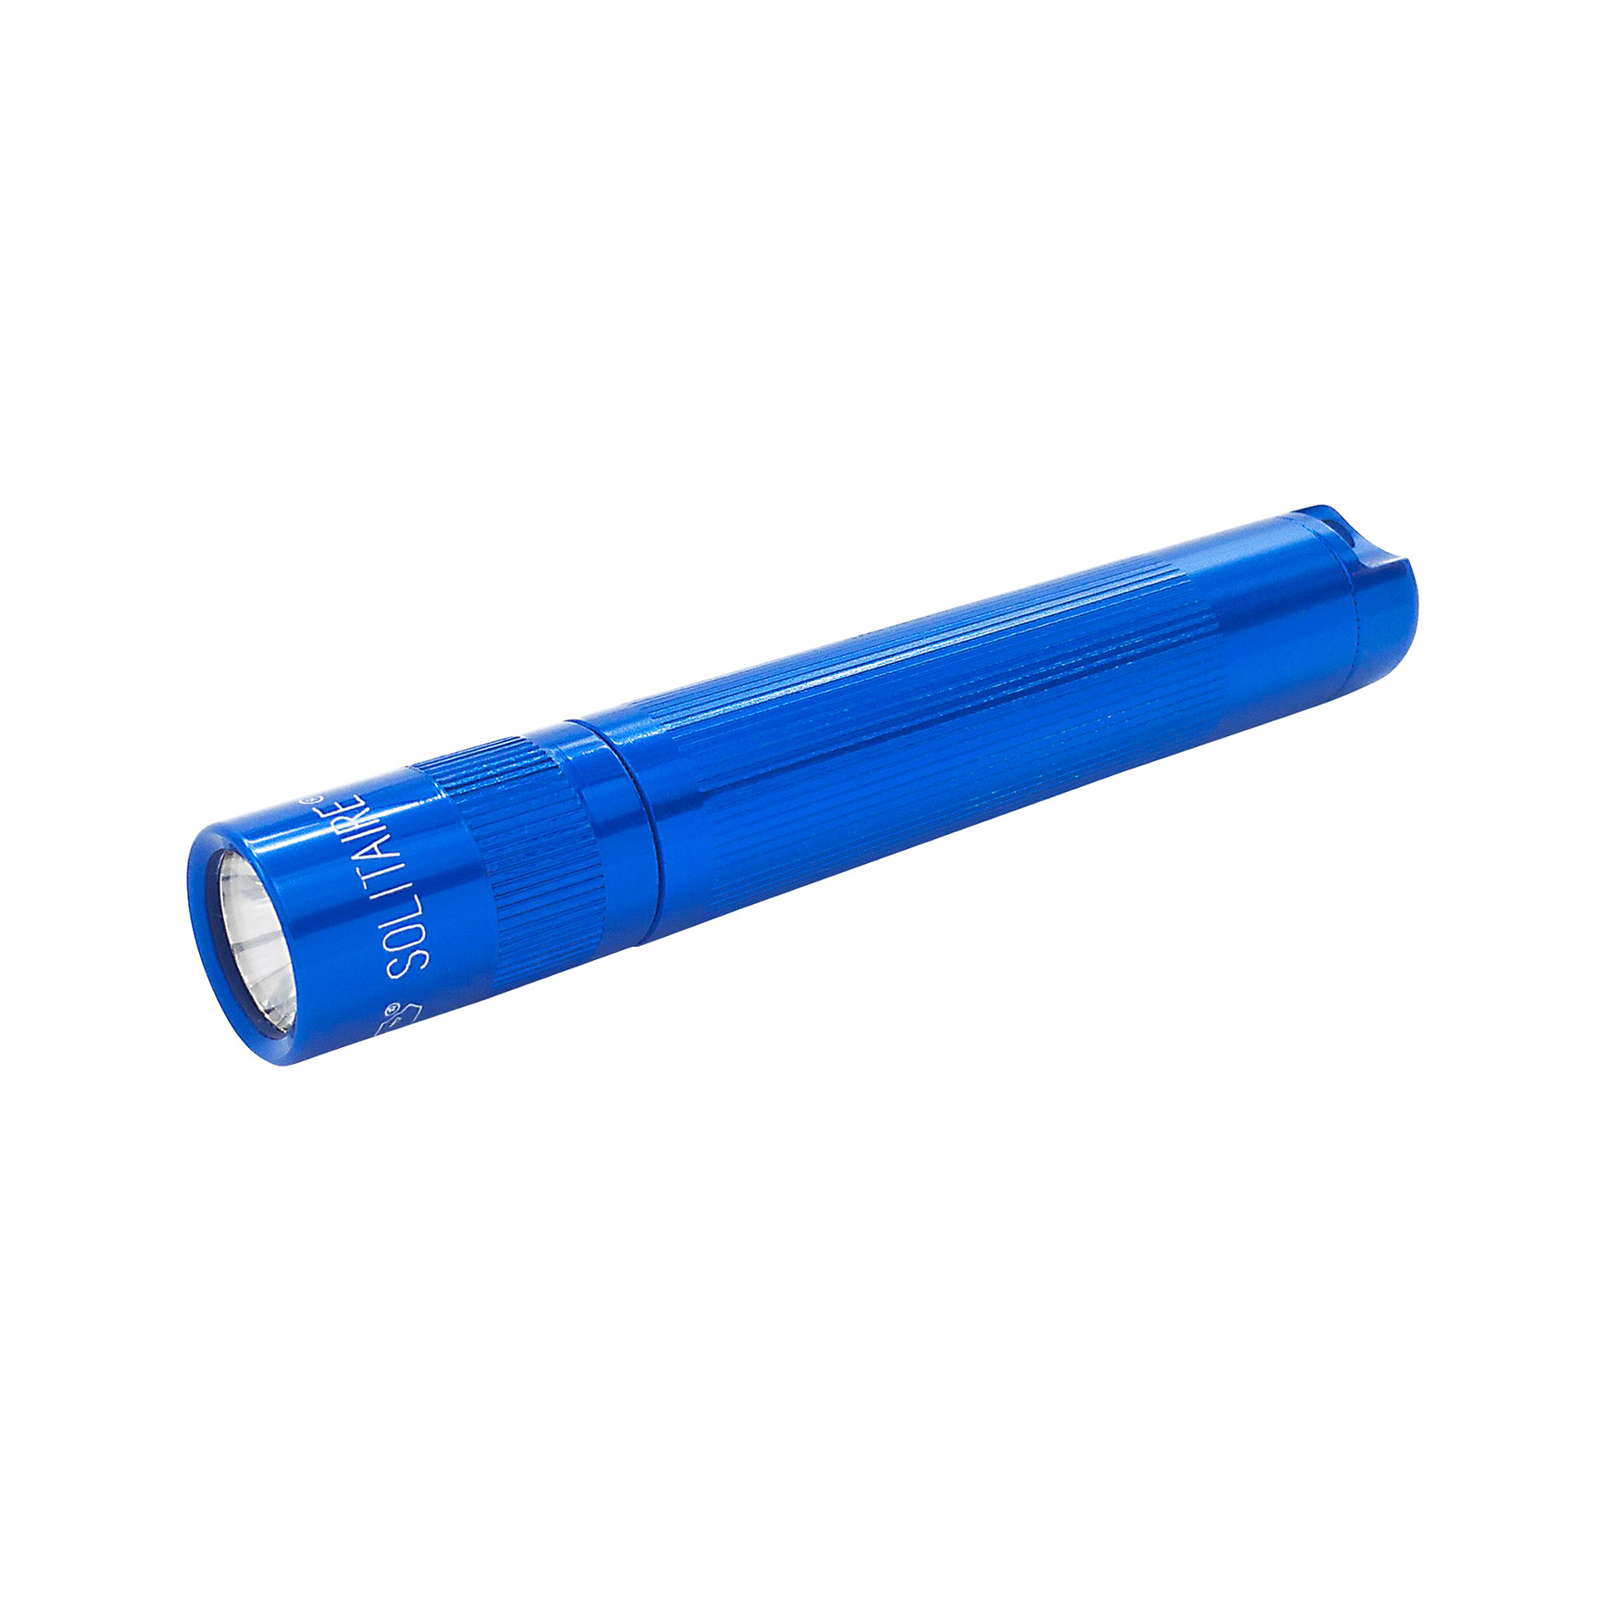 Maglite Xenon-Taschenlampe Solitaire 1-Cell AAA, Box, blau